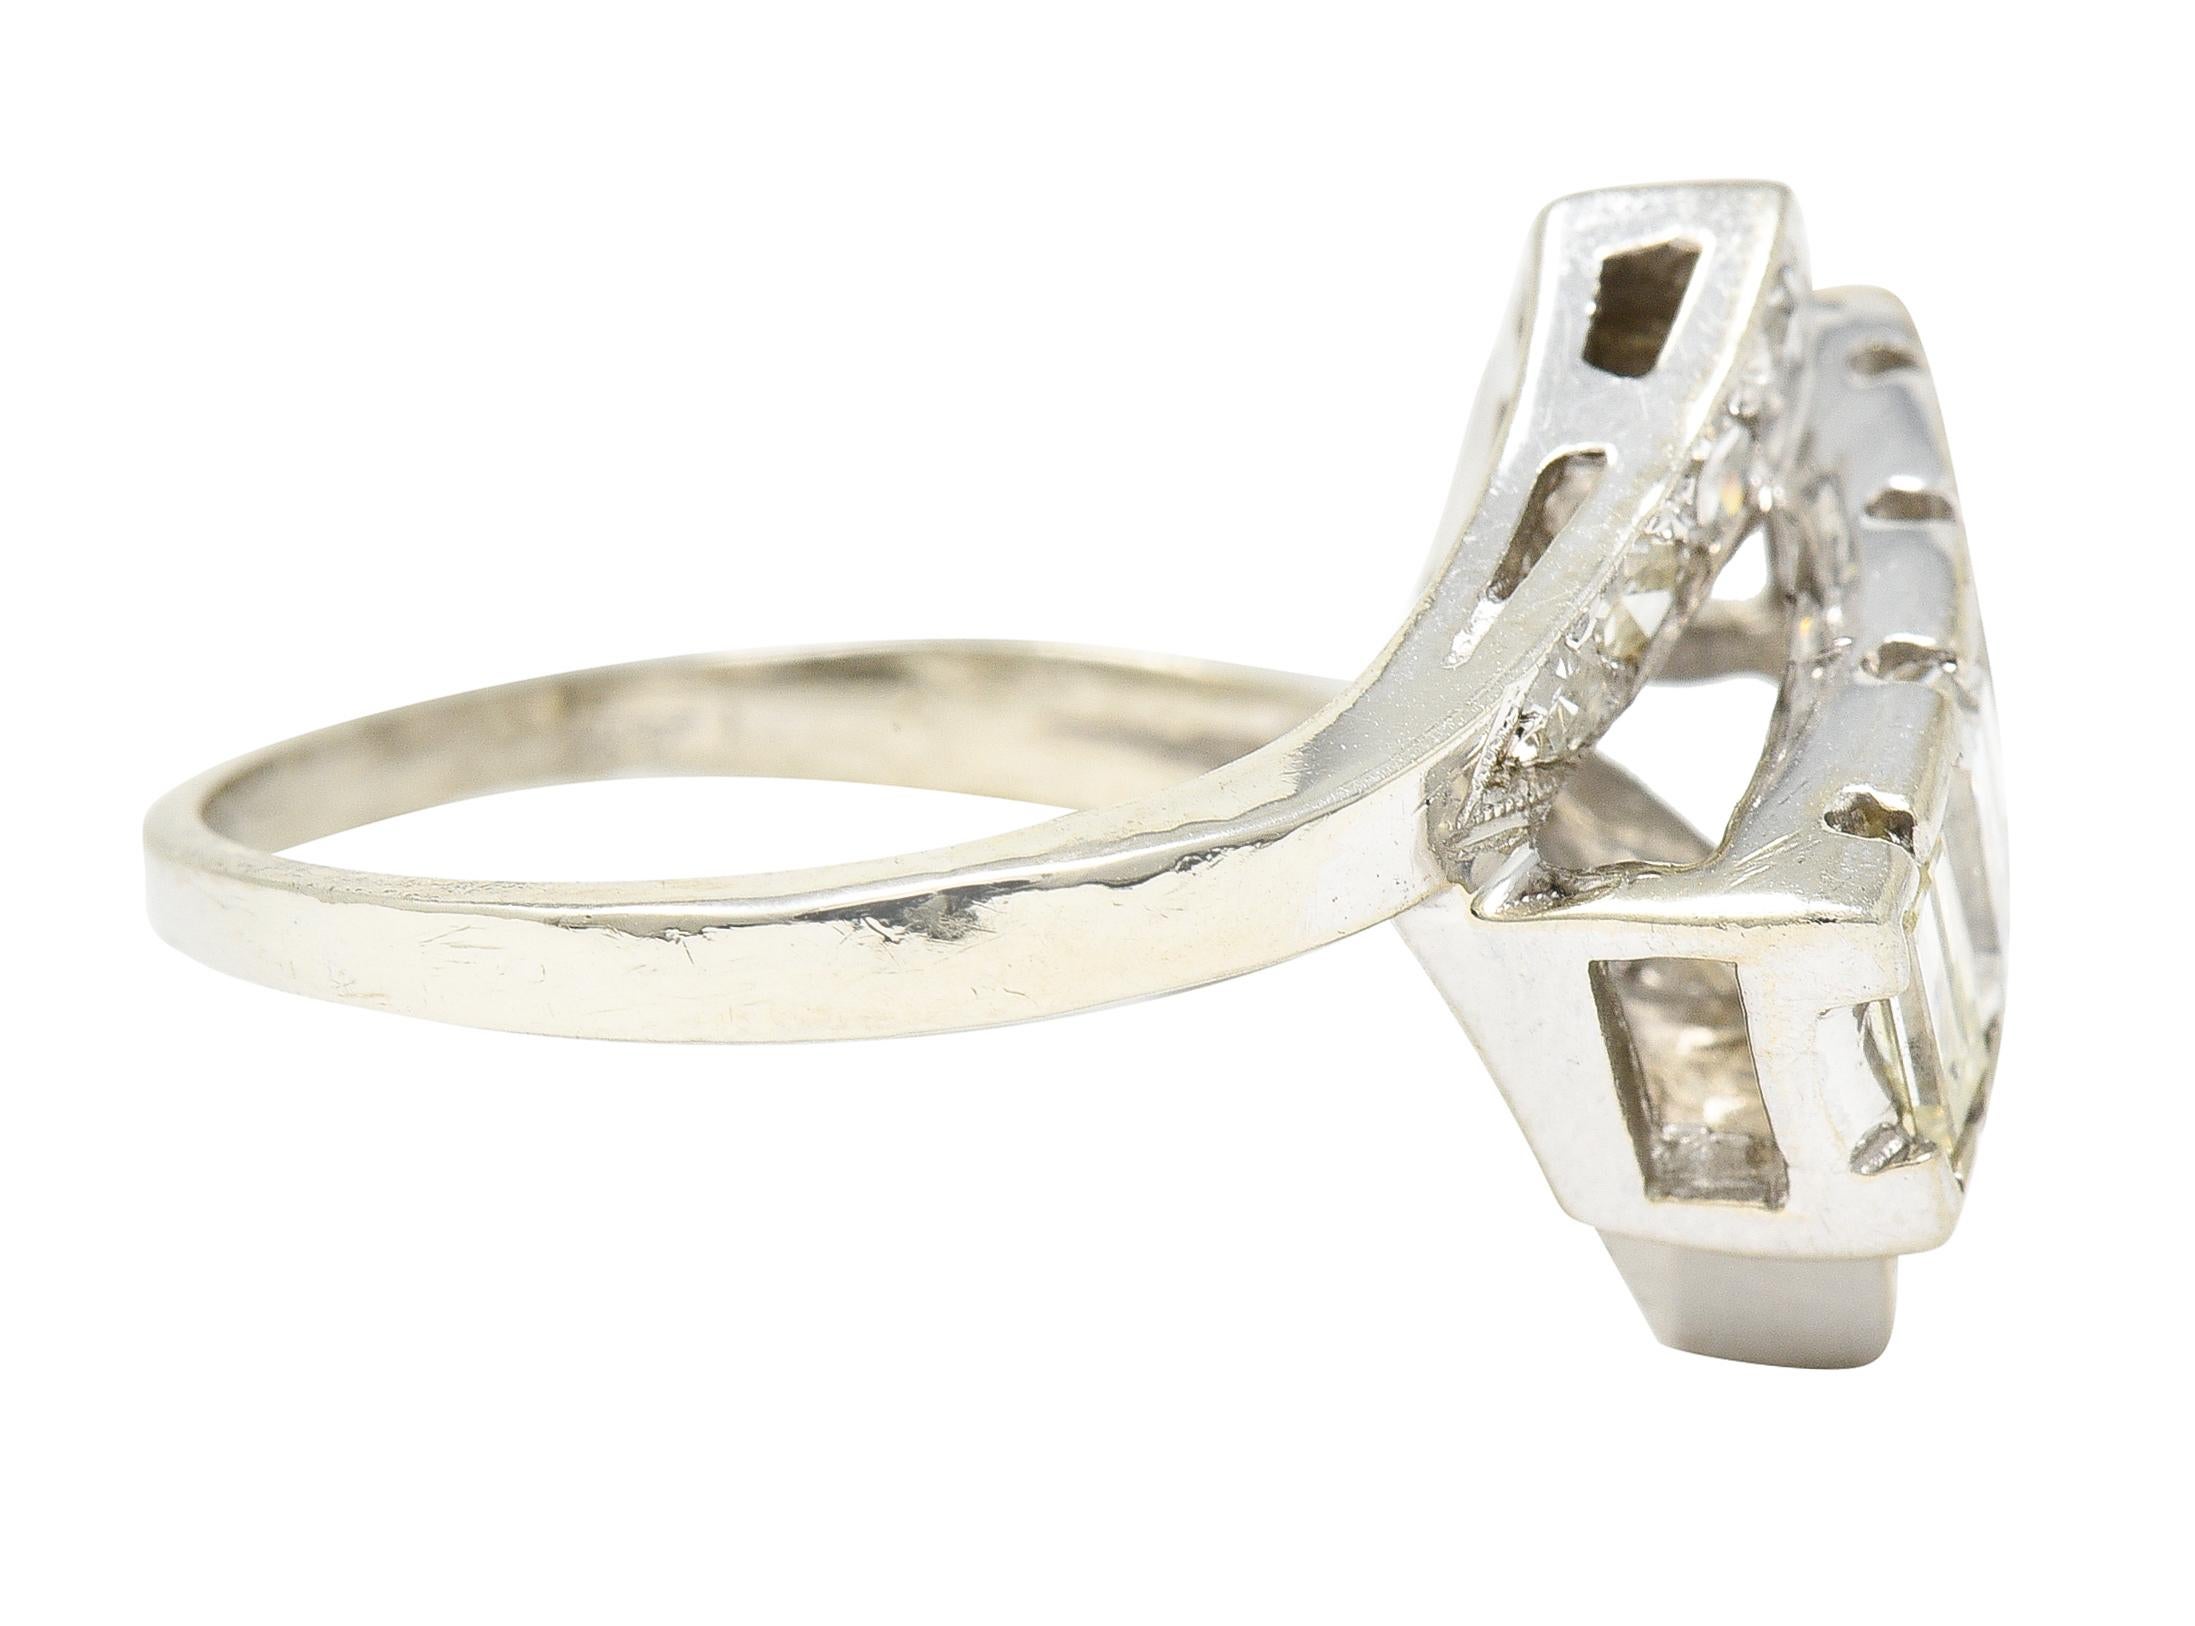 100 carat diamond ring